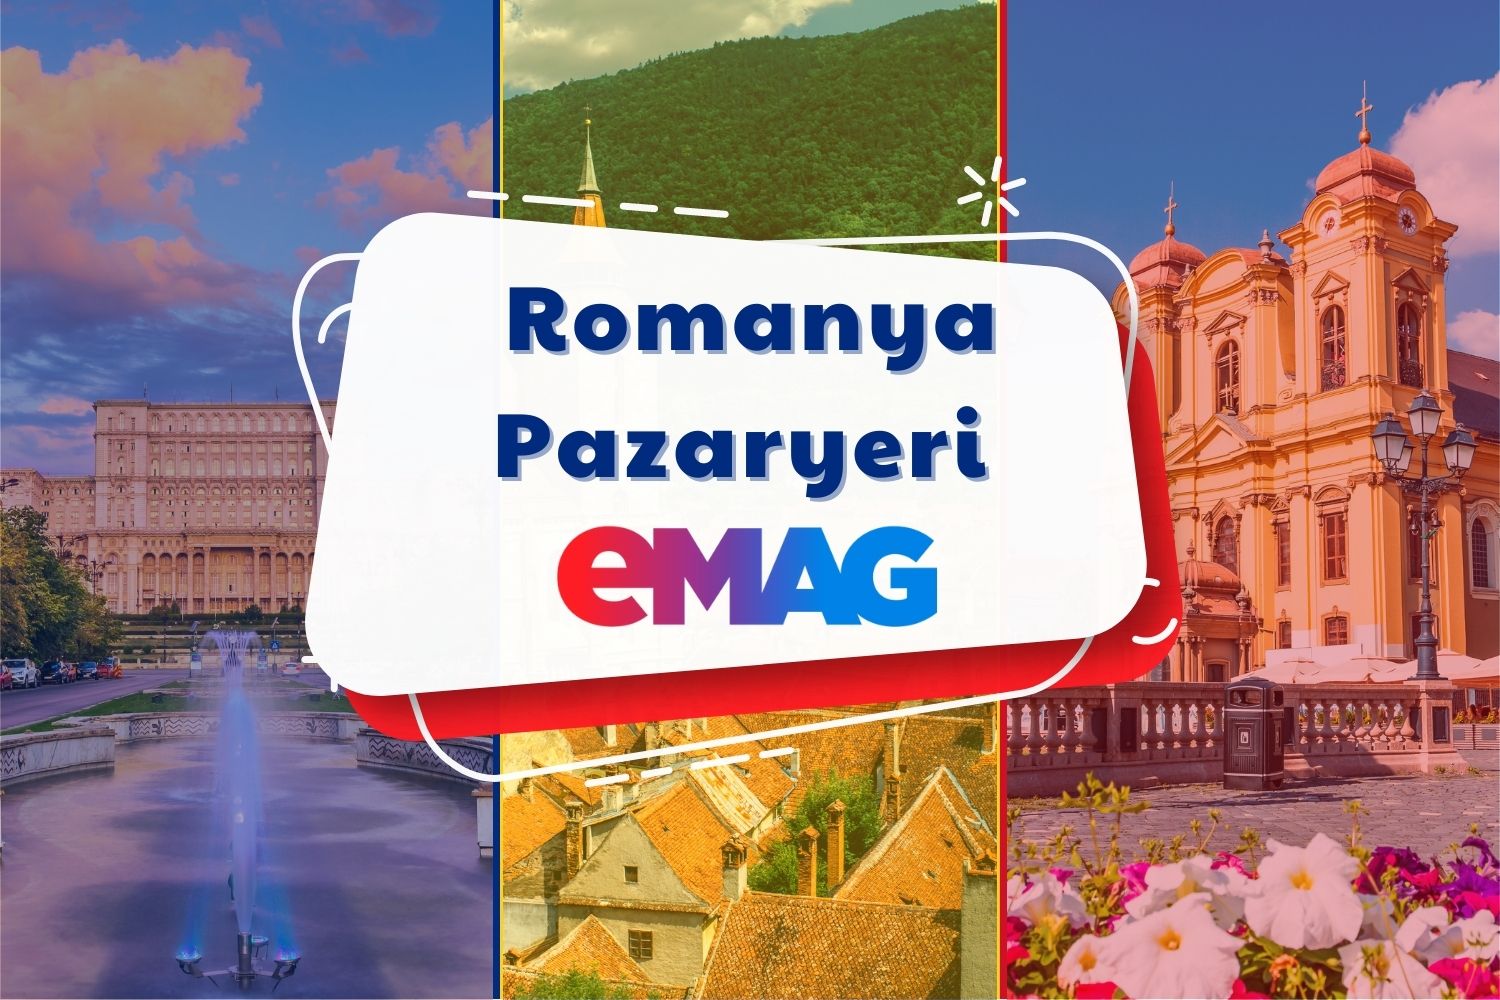 emag-romanyada-satis-yapmak-romanyaya-ihracat-eticaret-danismanlik-eihracat-danismanlik